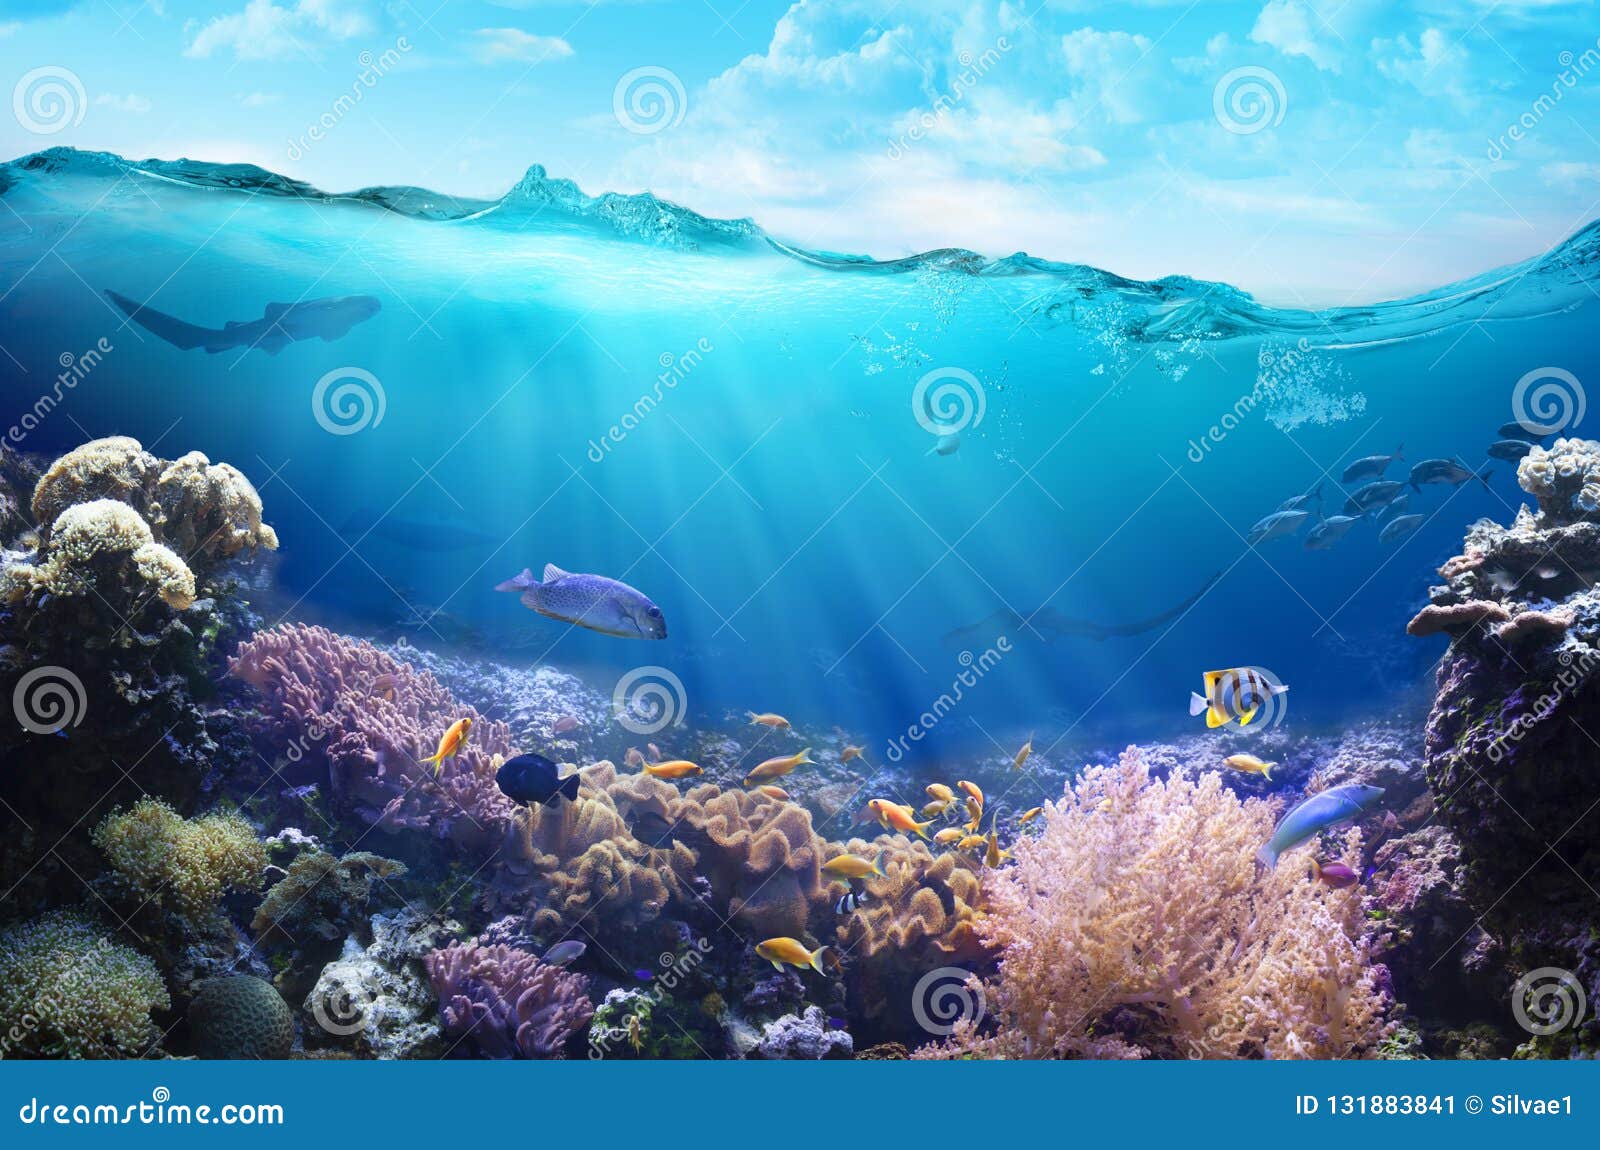 Ocean Underwater with Marine Animals. Stock Image - Image of marine ...